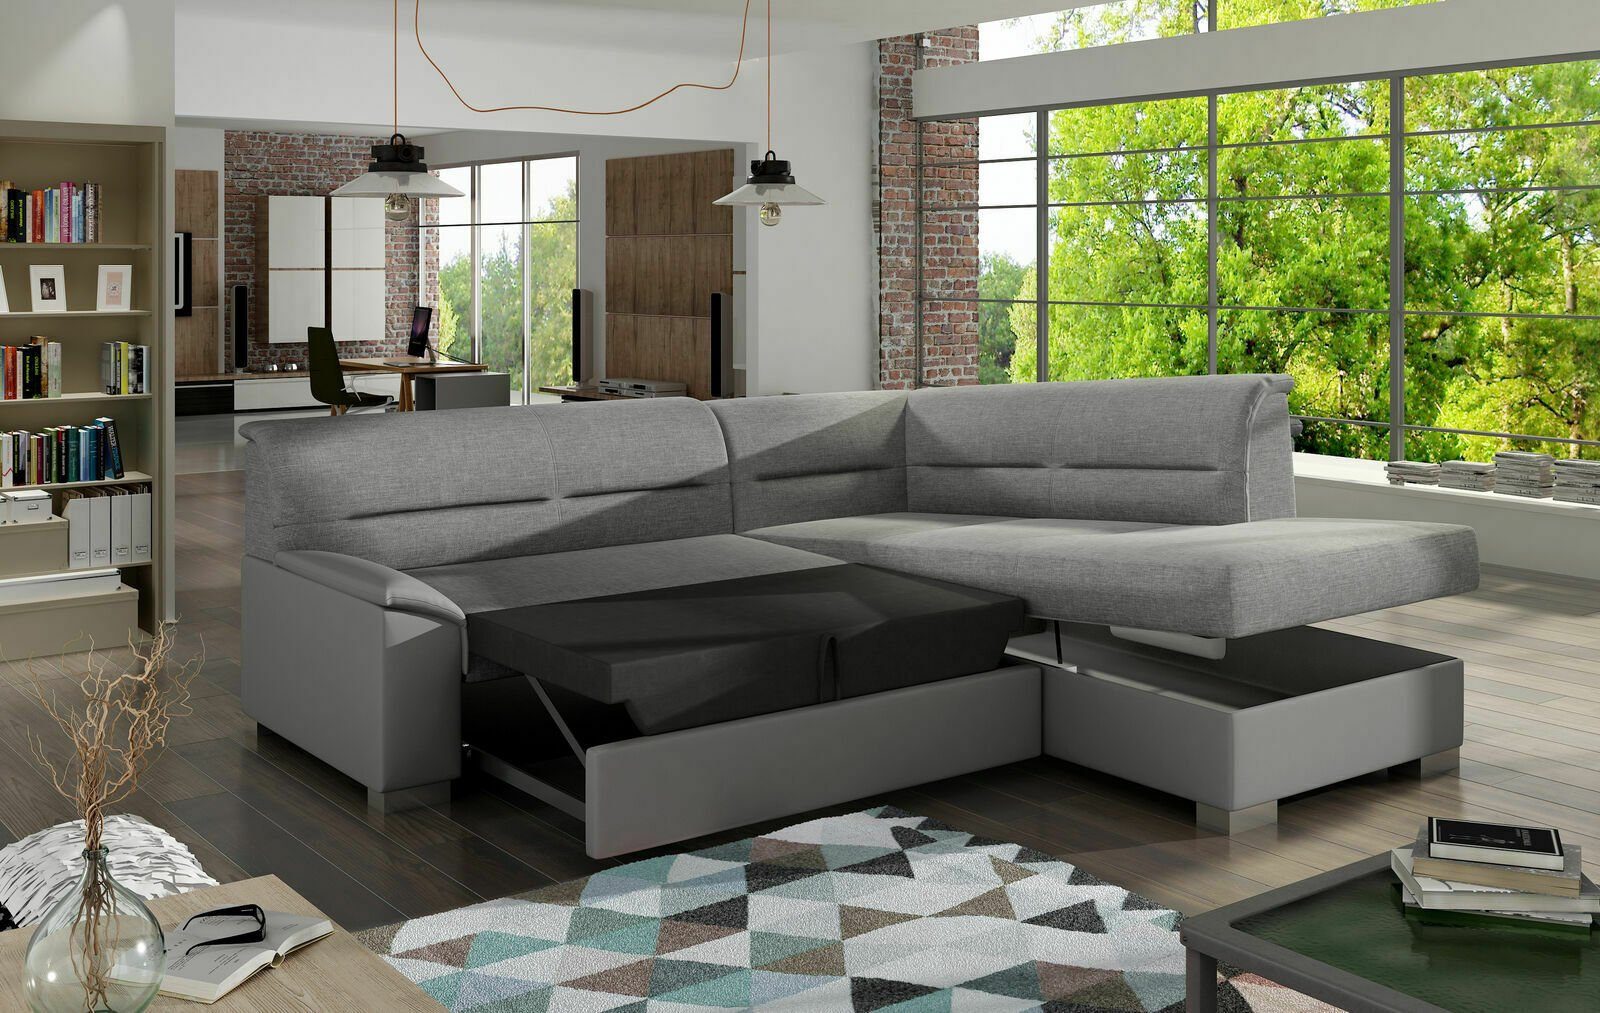 JVmoebel Ecksofa Design Sofa Ecksofa Schlafsofa Bettfunktion Couch Polster Textil, Mit Bettfunktion Grau